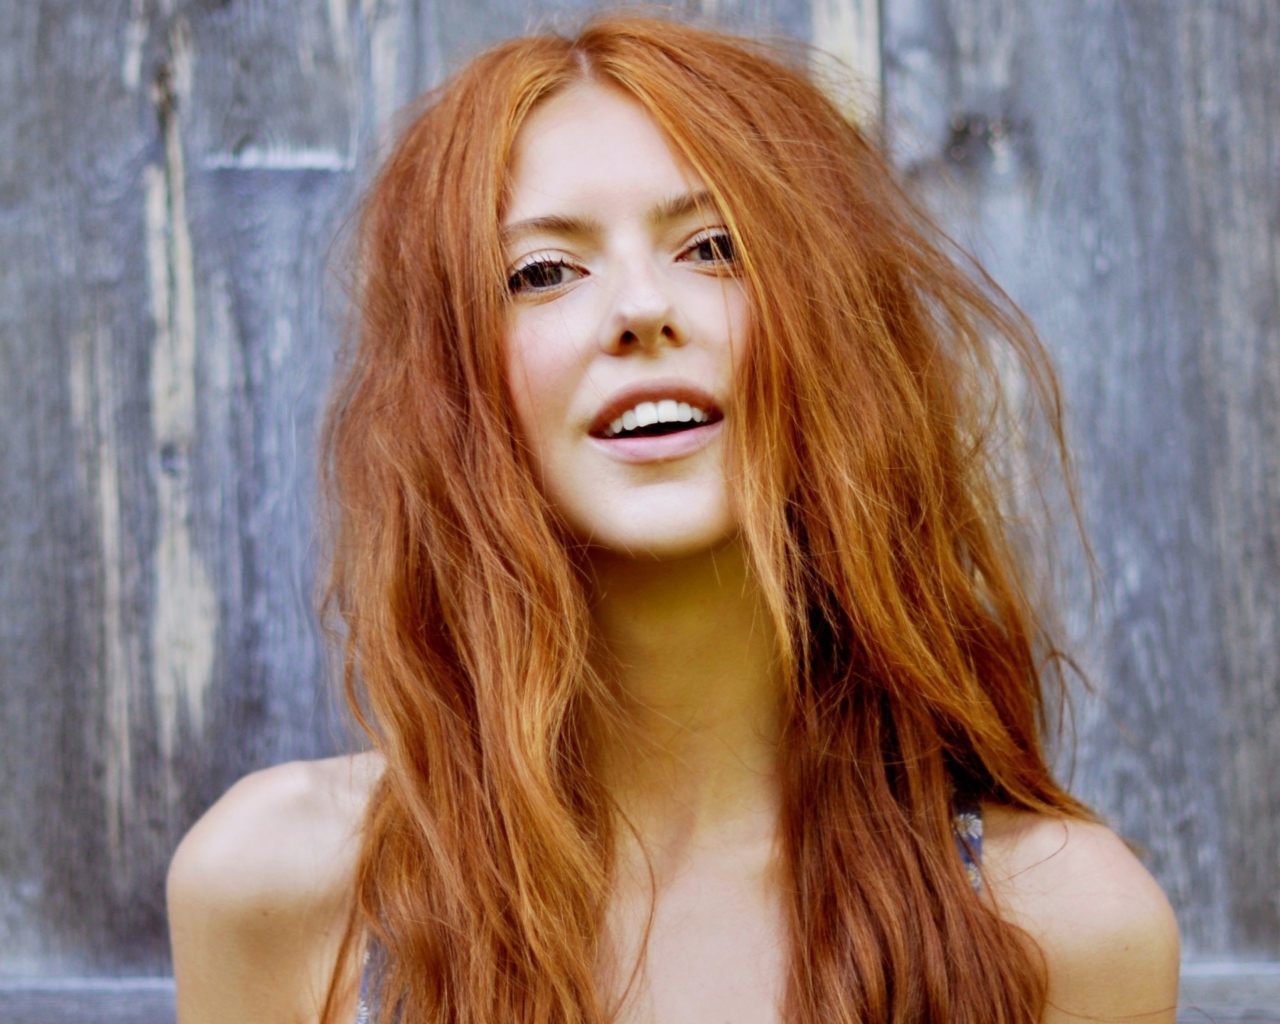 Gorgeous Redhead Girl Smiling wallpaper 1280x1024